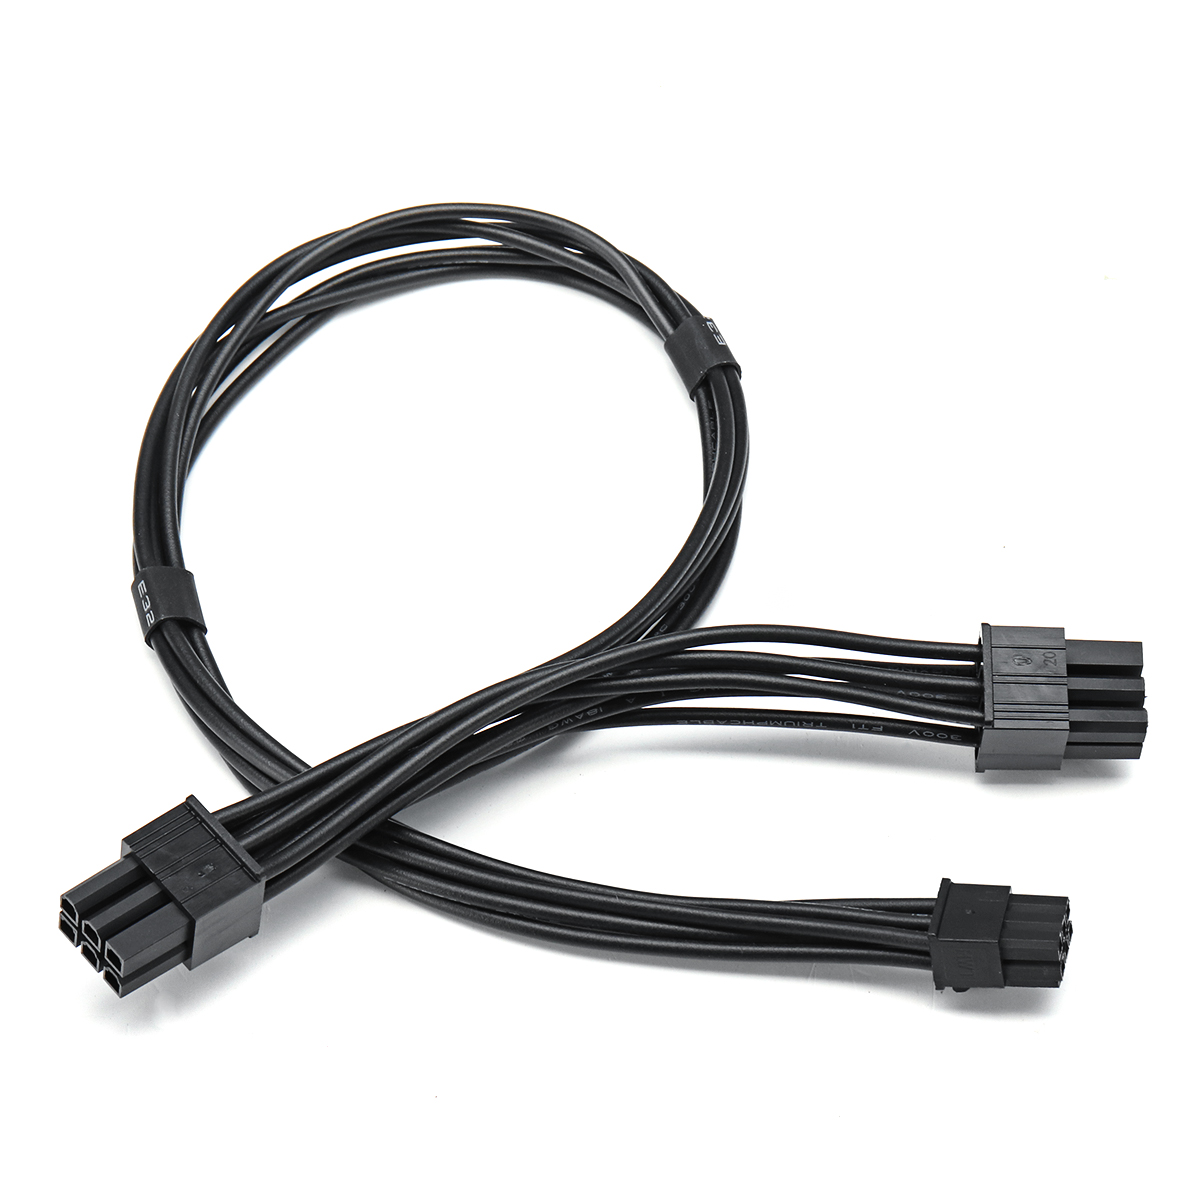 

18AWG Mini 6 Pin для Dual PCI-E PCIe 6-контактный кабель для видеокарты Power Cable для Apple для Mac Pro G5